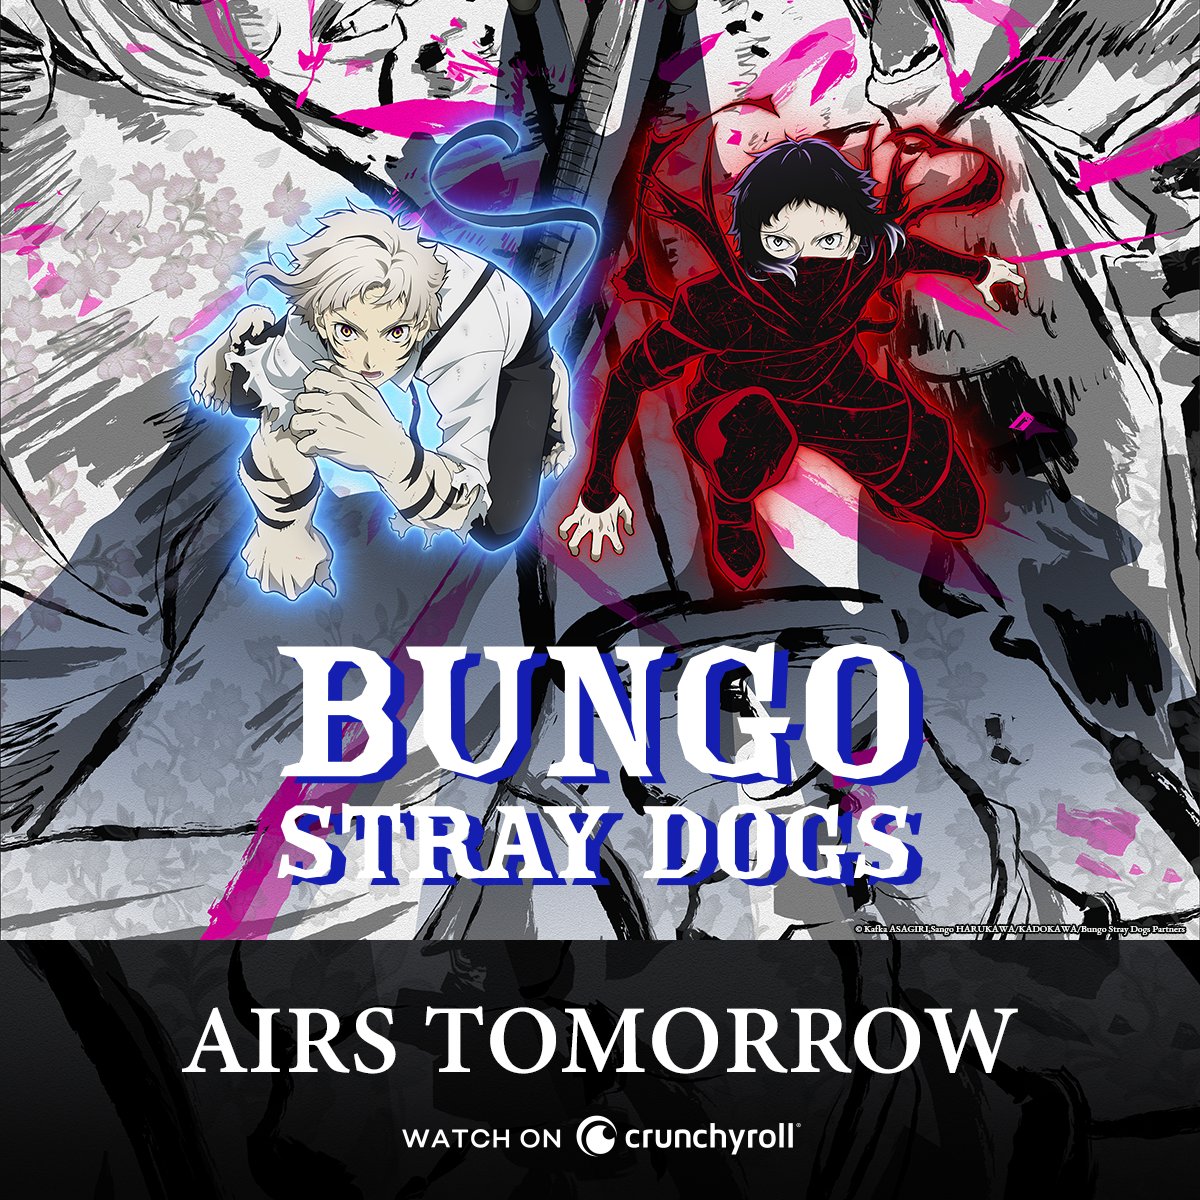 Bungo Stray Dogs 5 The Strongest Man - Watch on Crunchyroll